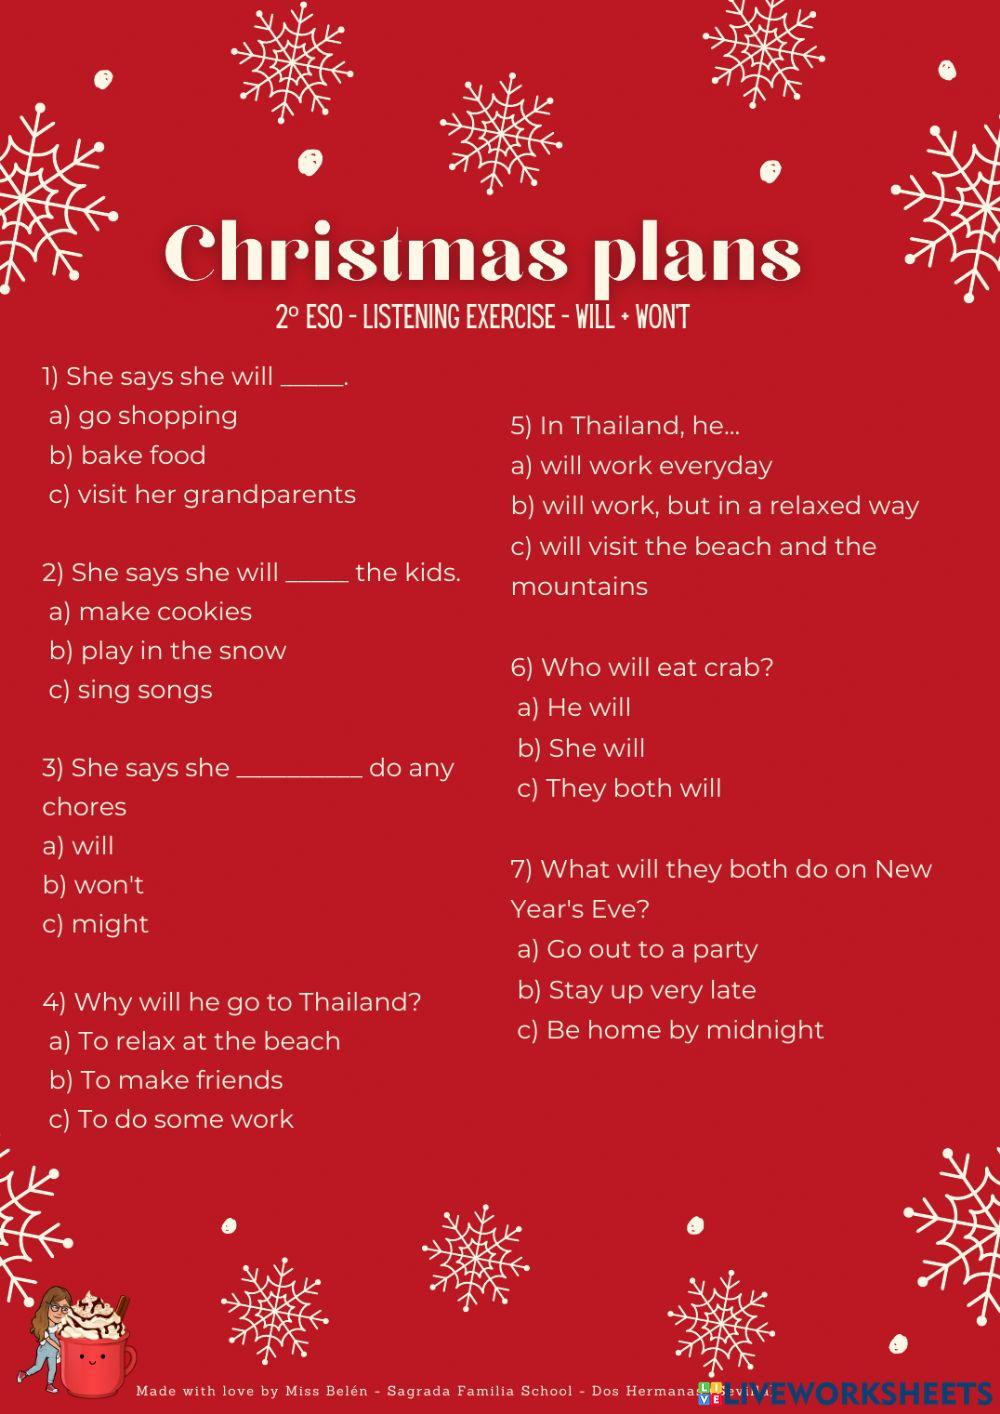 Christmas plans - Listening exercise